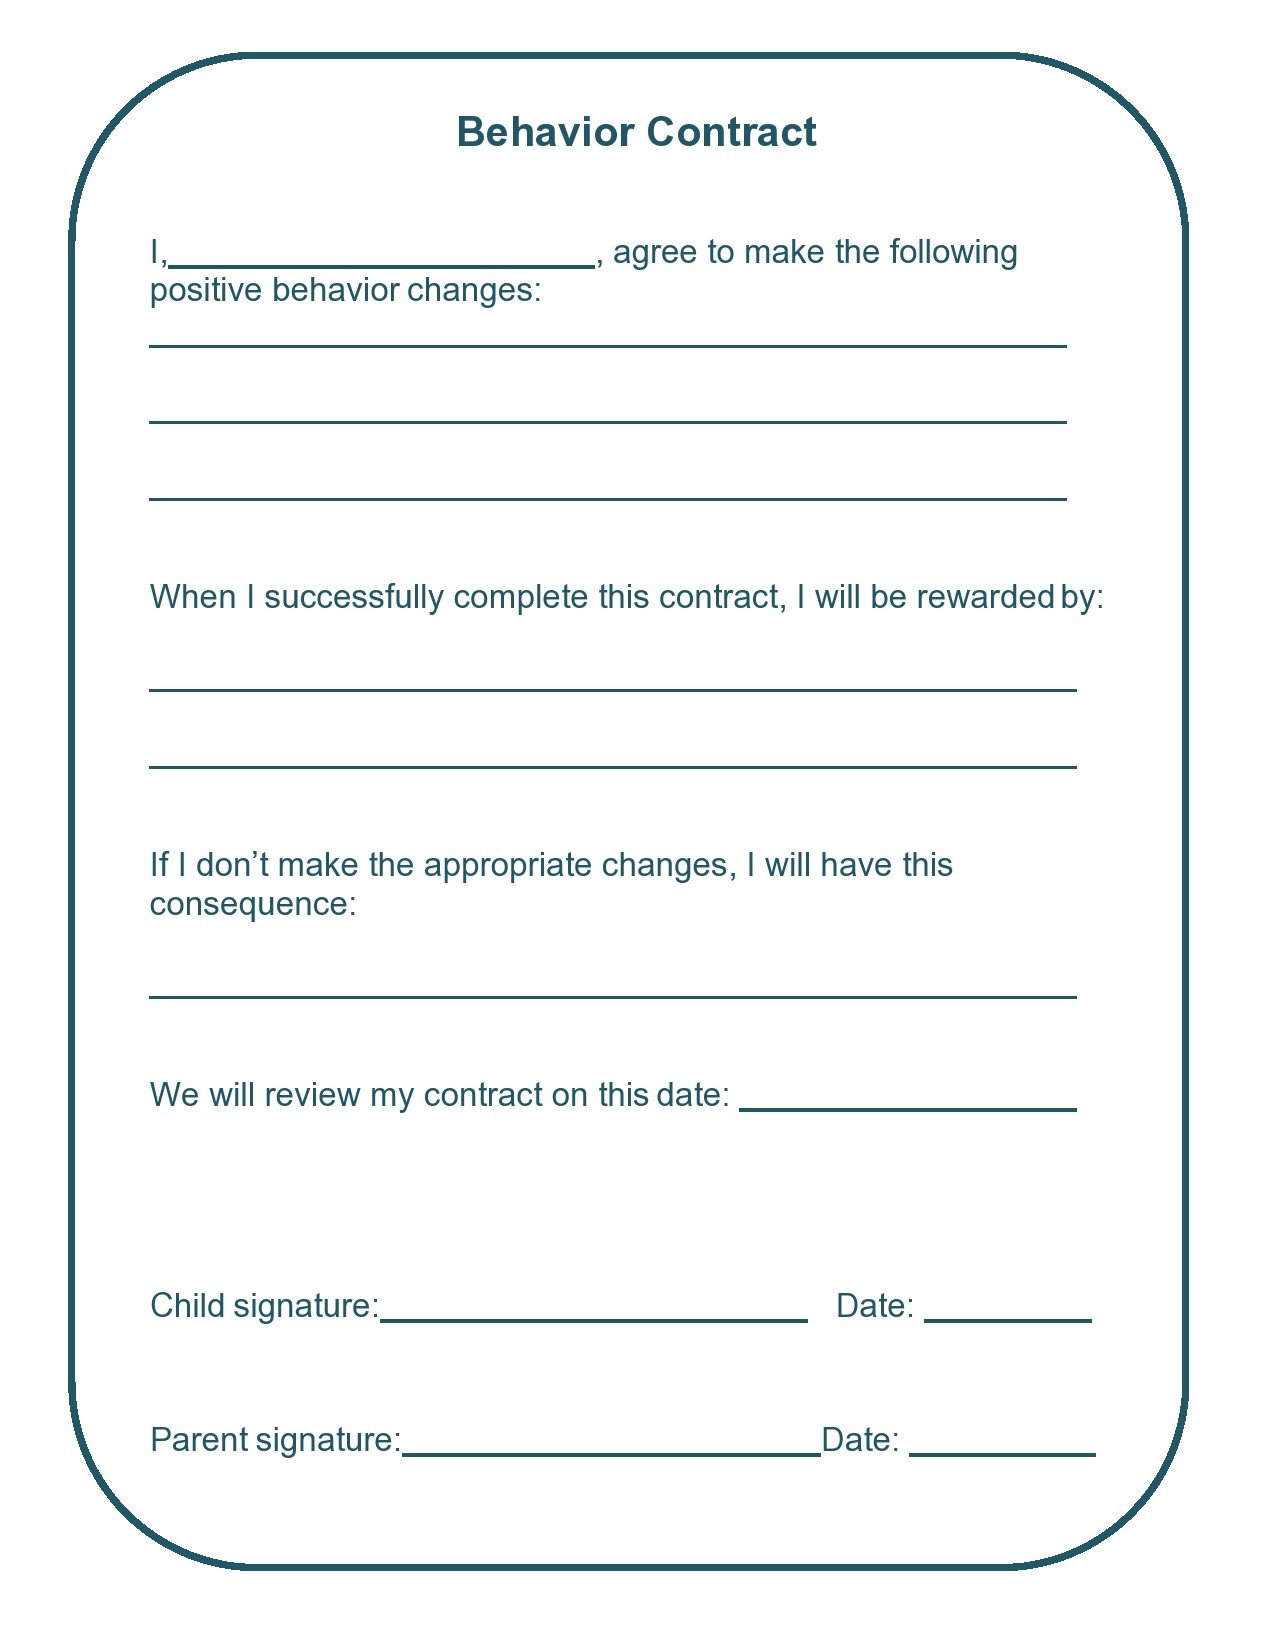 Free behavior contract template 13